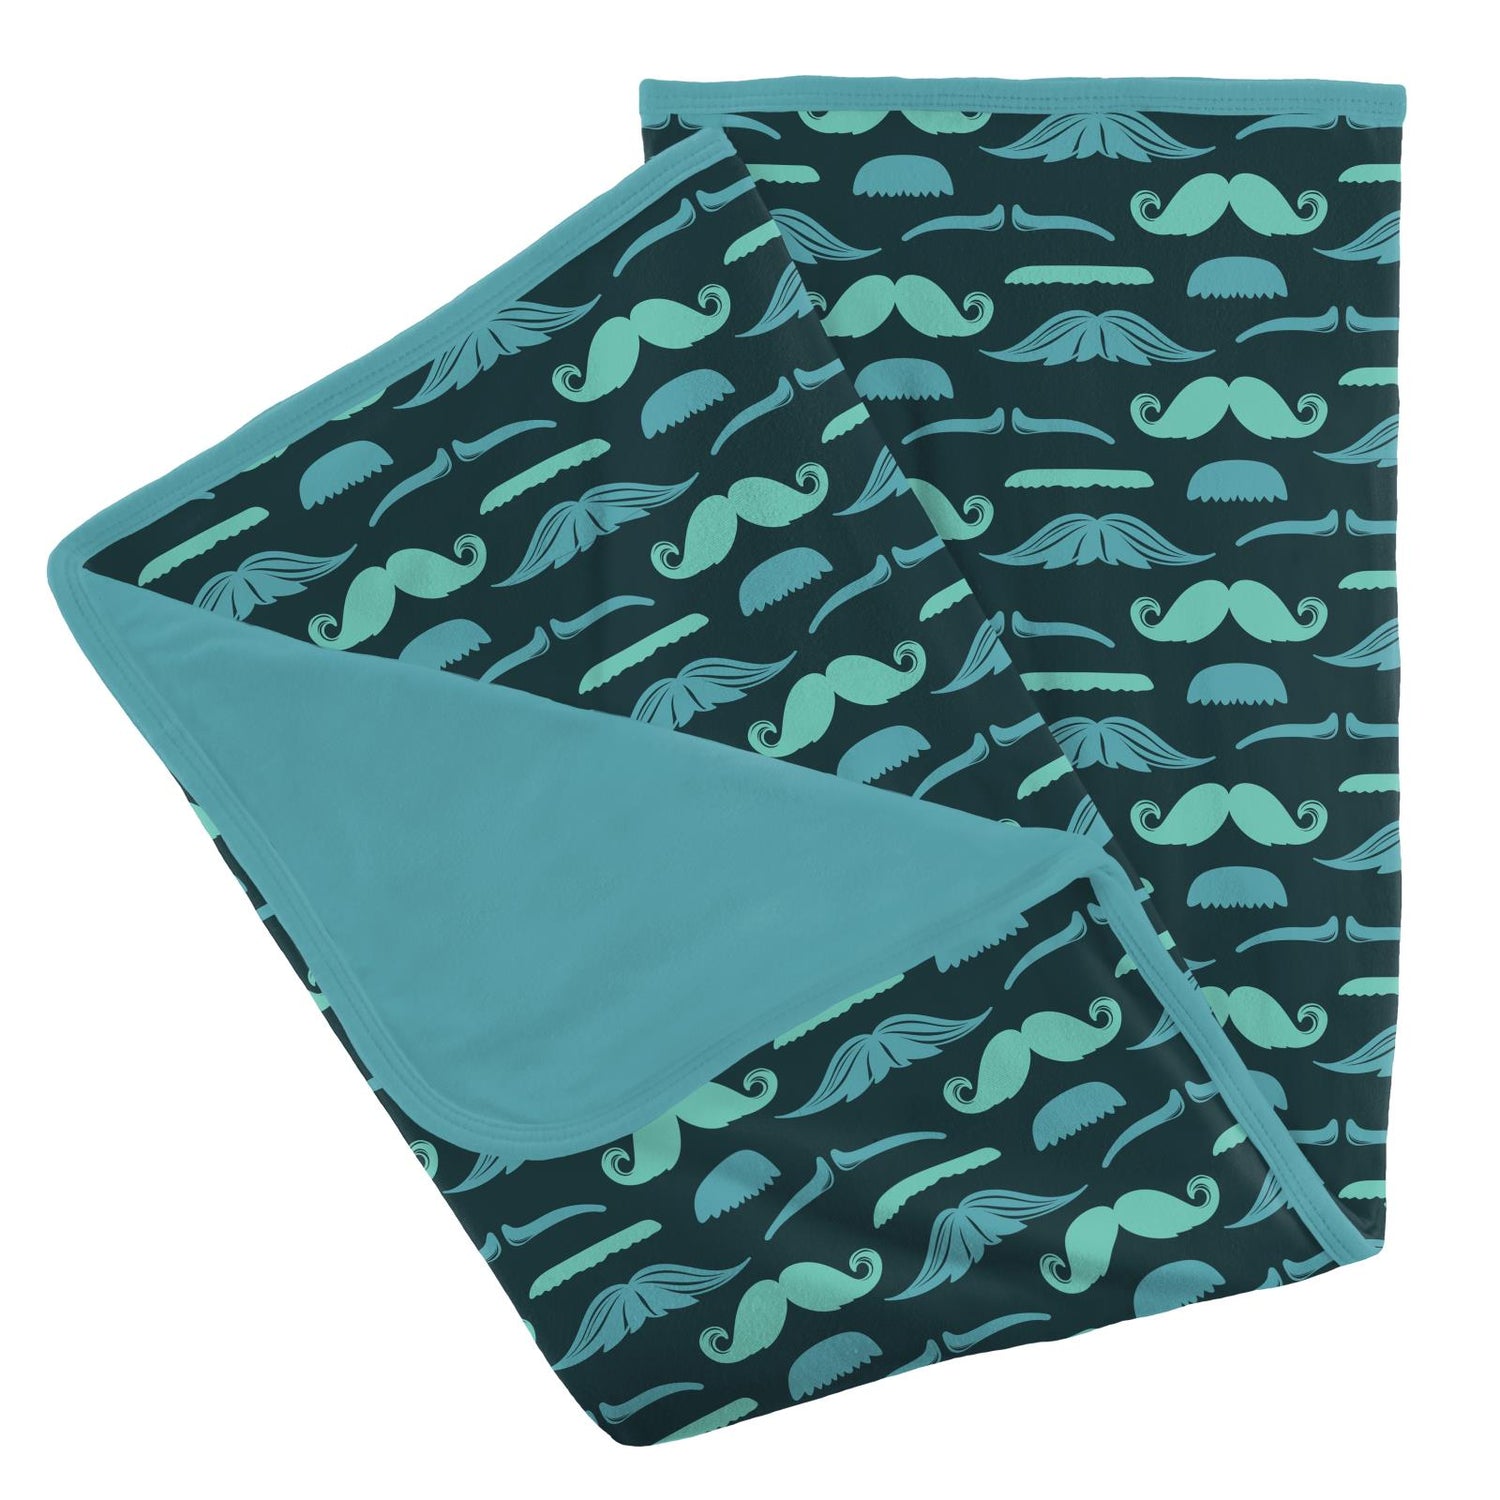 Print Stroller Blanket in Pine Moustaches